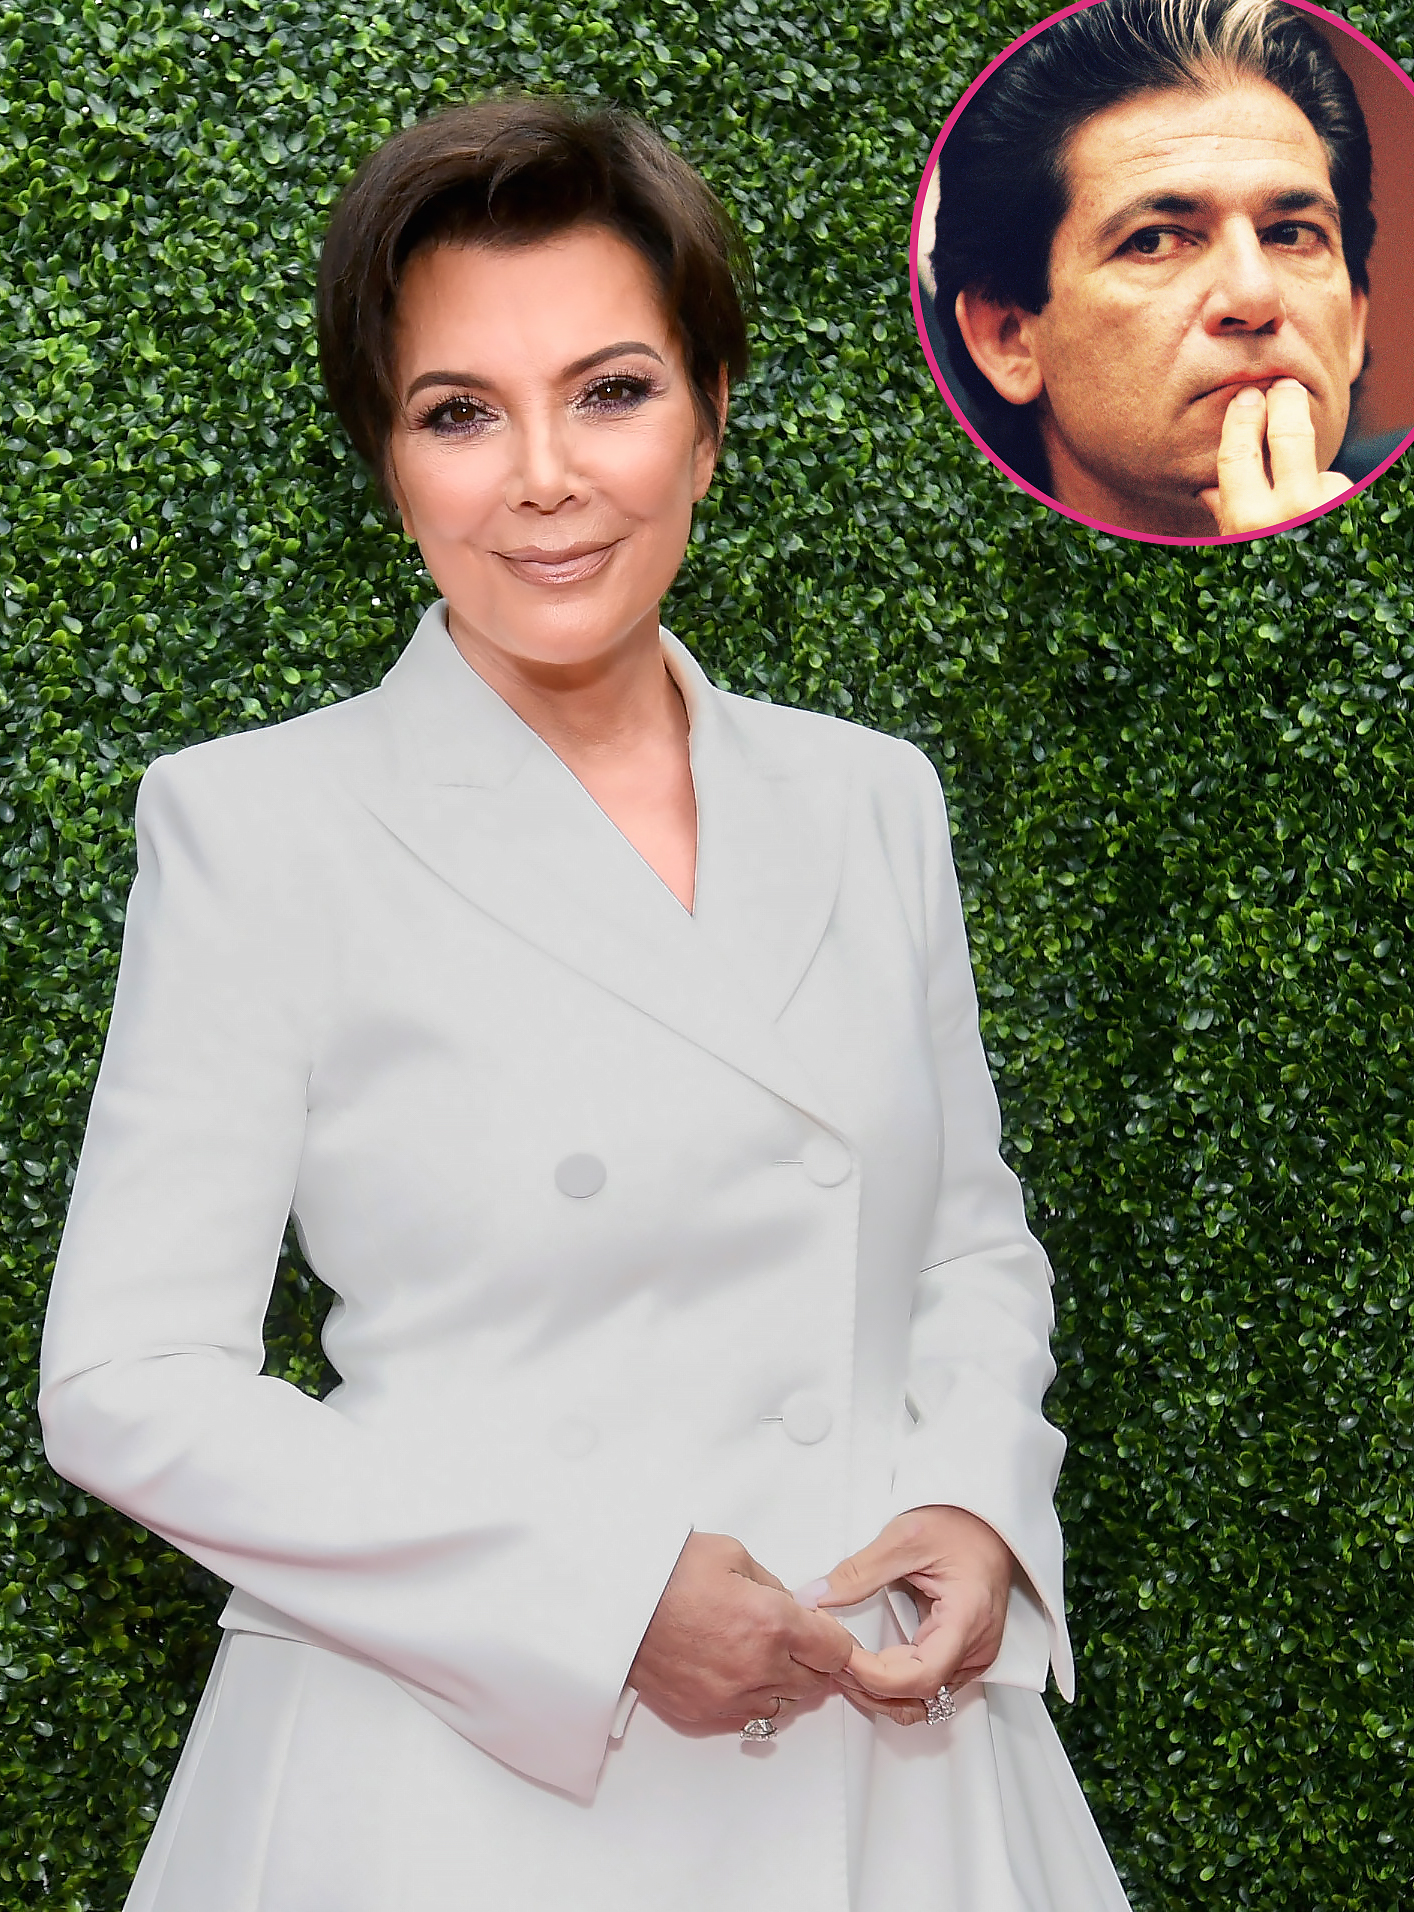 Kris Jenner Compares Her Cheating on Robert Kardashian to Tristan Thompsons Infidelity Drama5